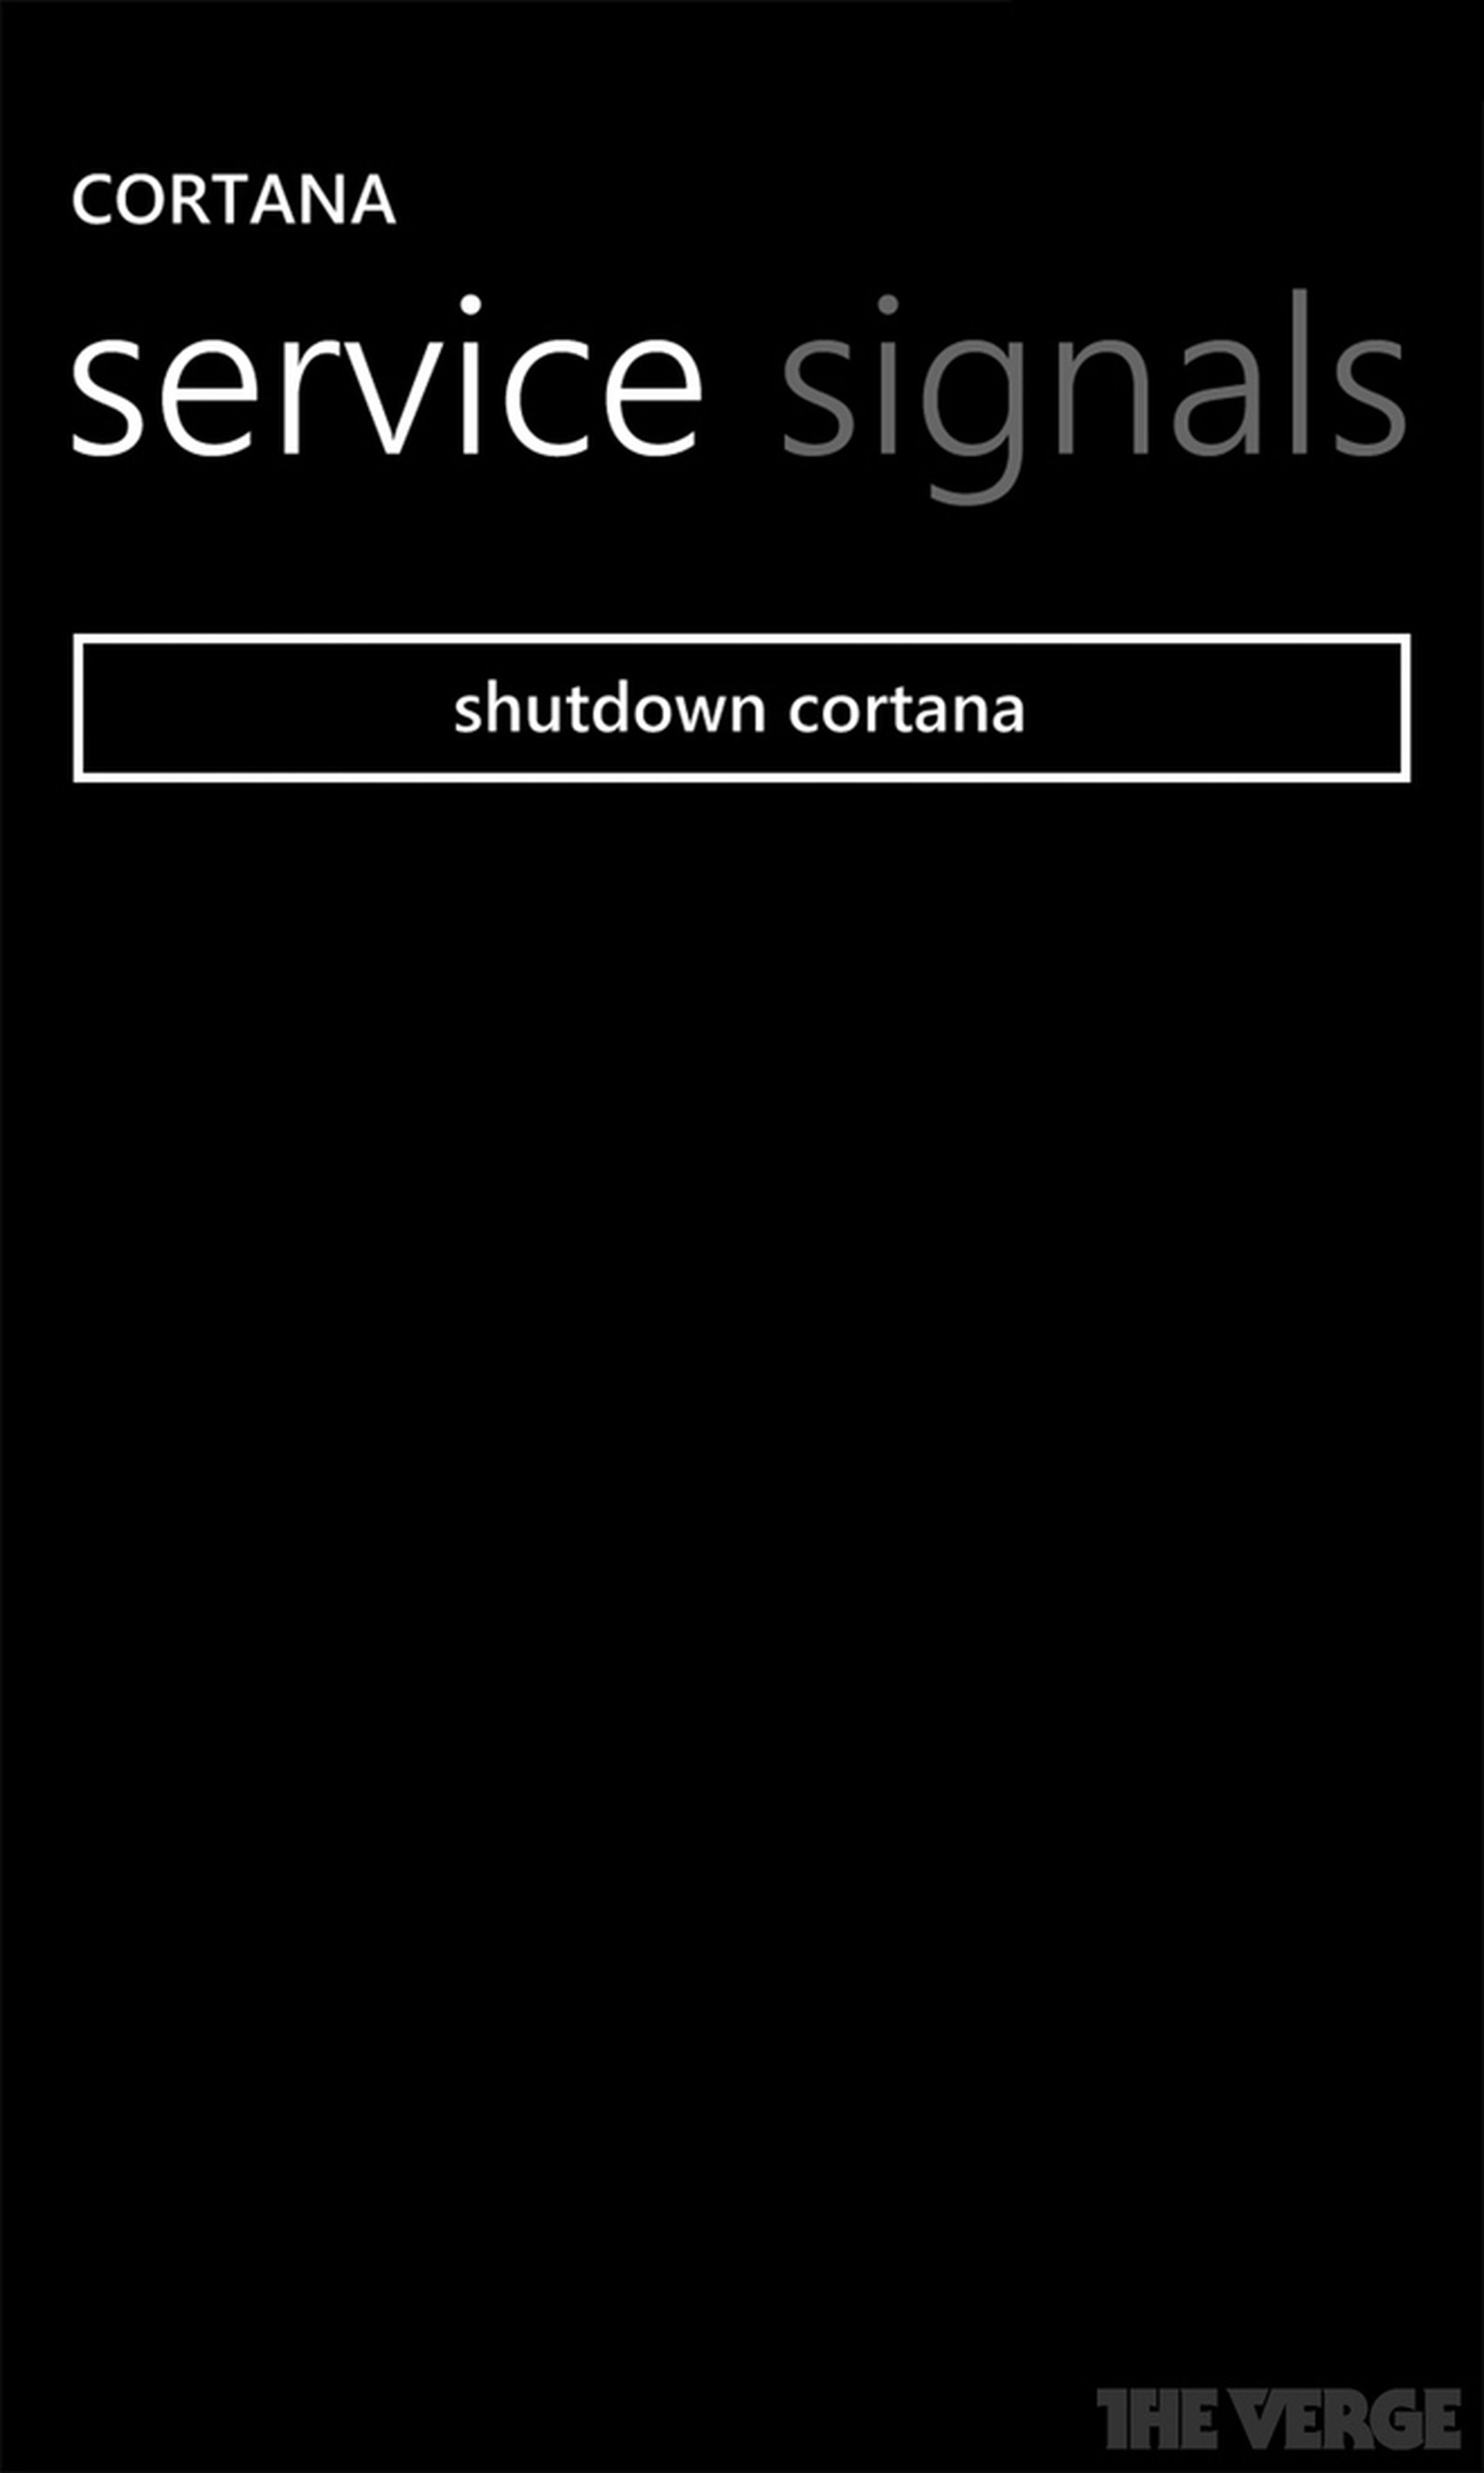 Windows Phone 8.1 'Cortana' personal assistant screenshots